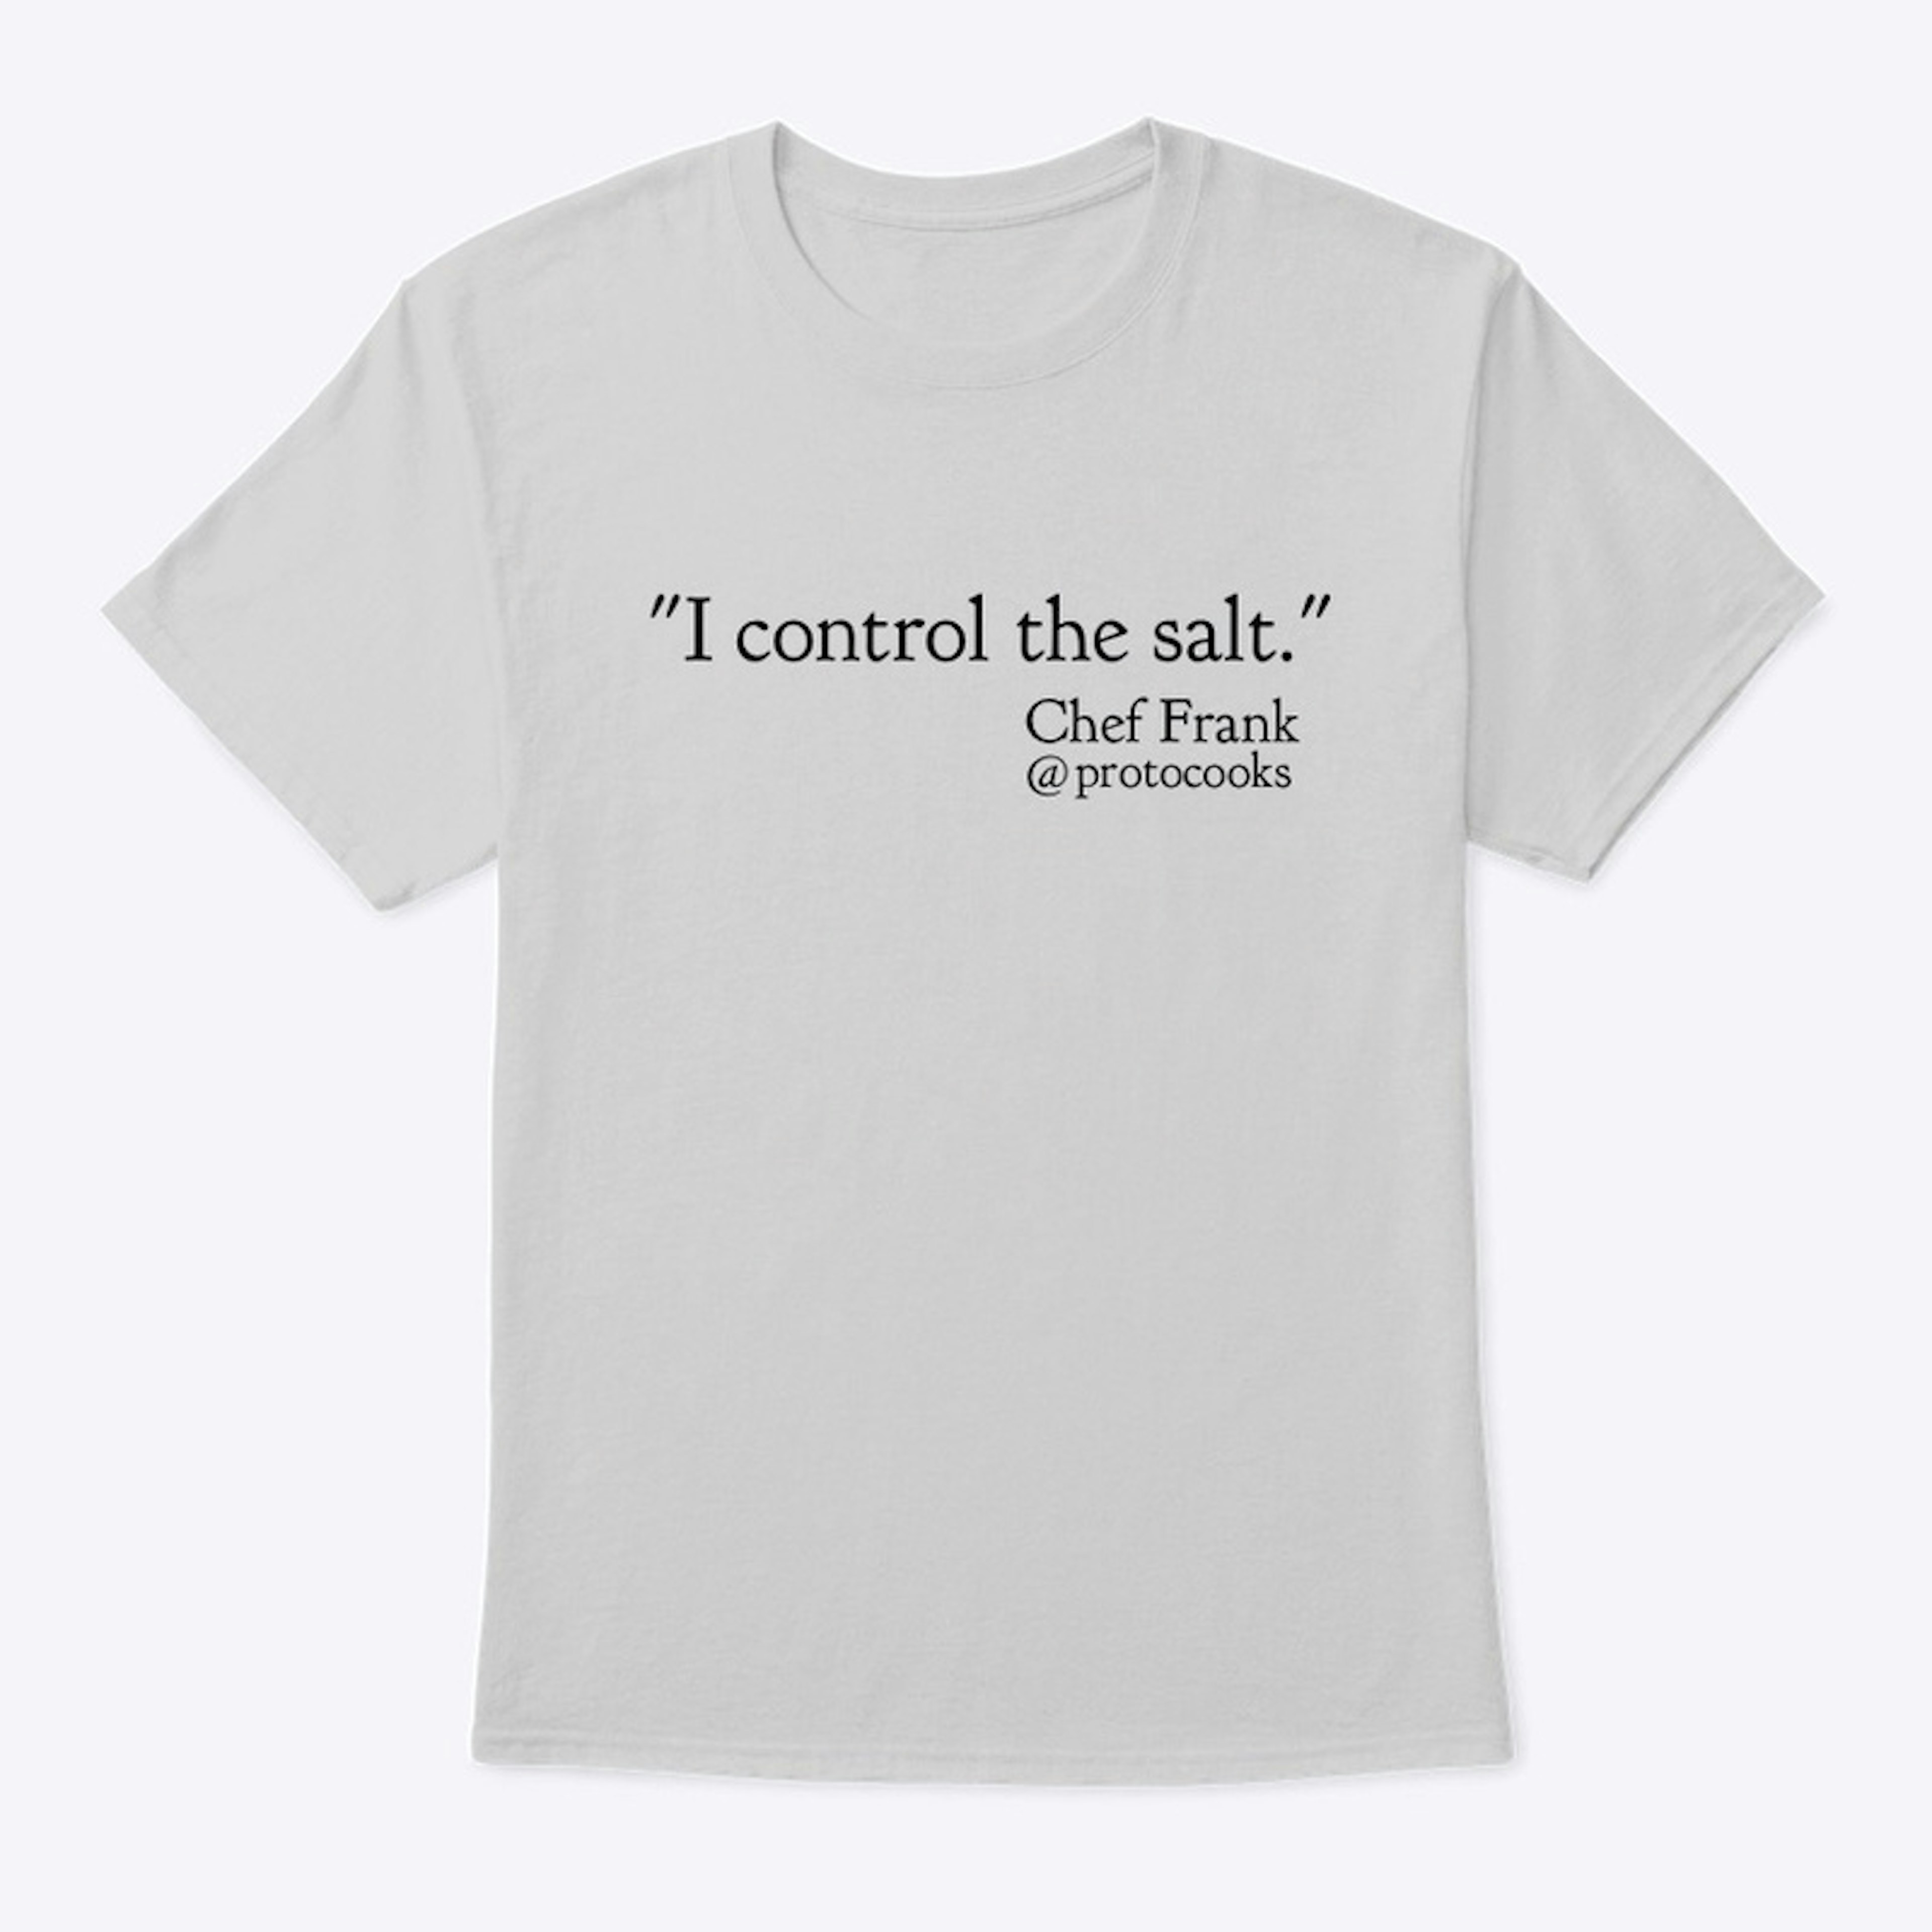 I control the salt